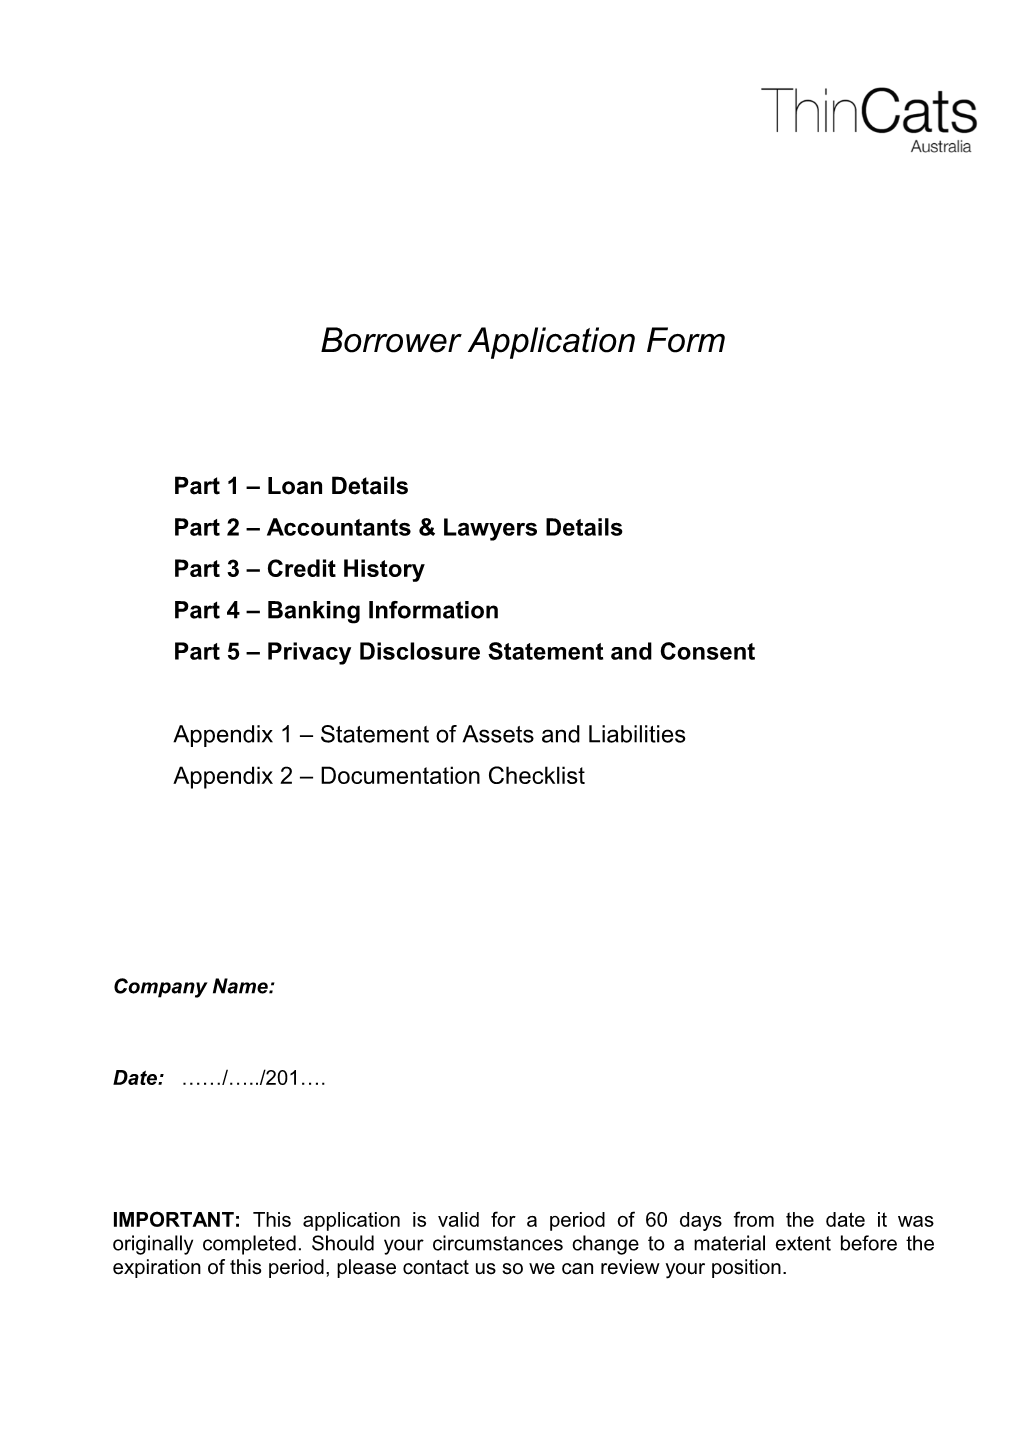 Part 2 Accountants & Lawyers Details